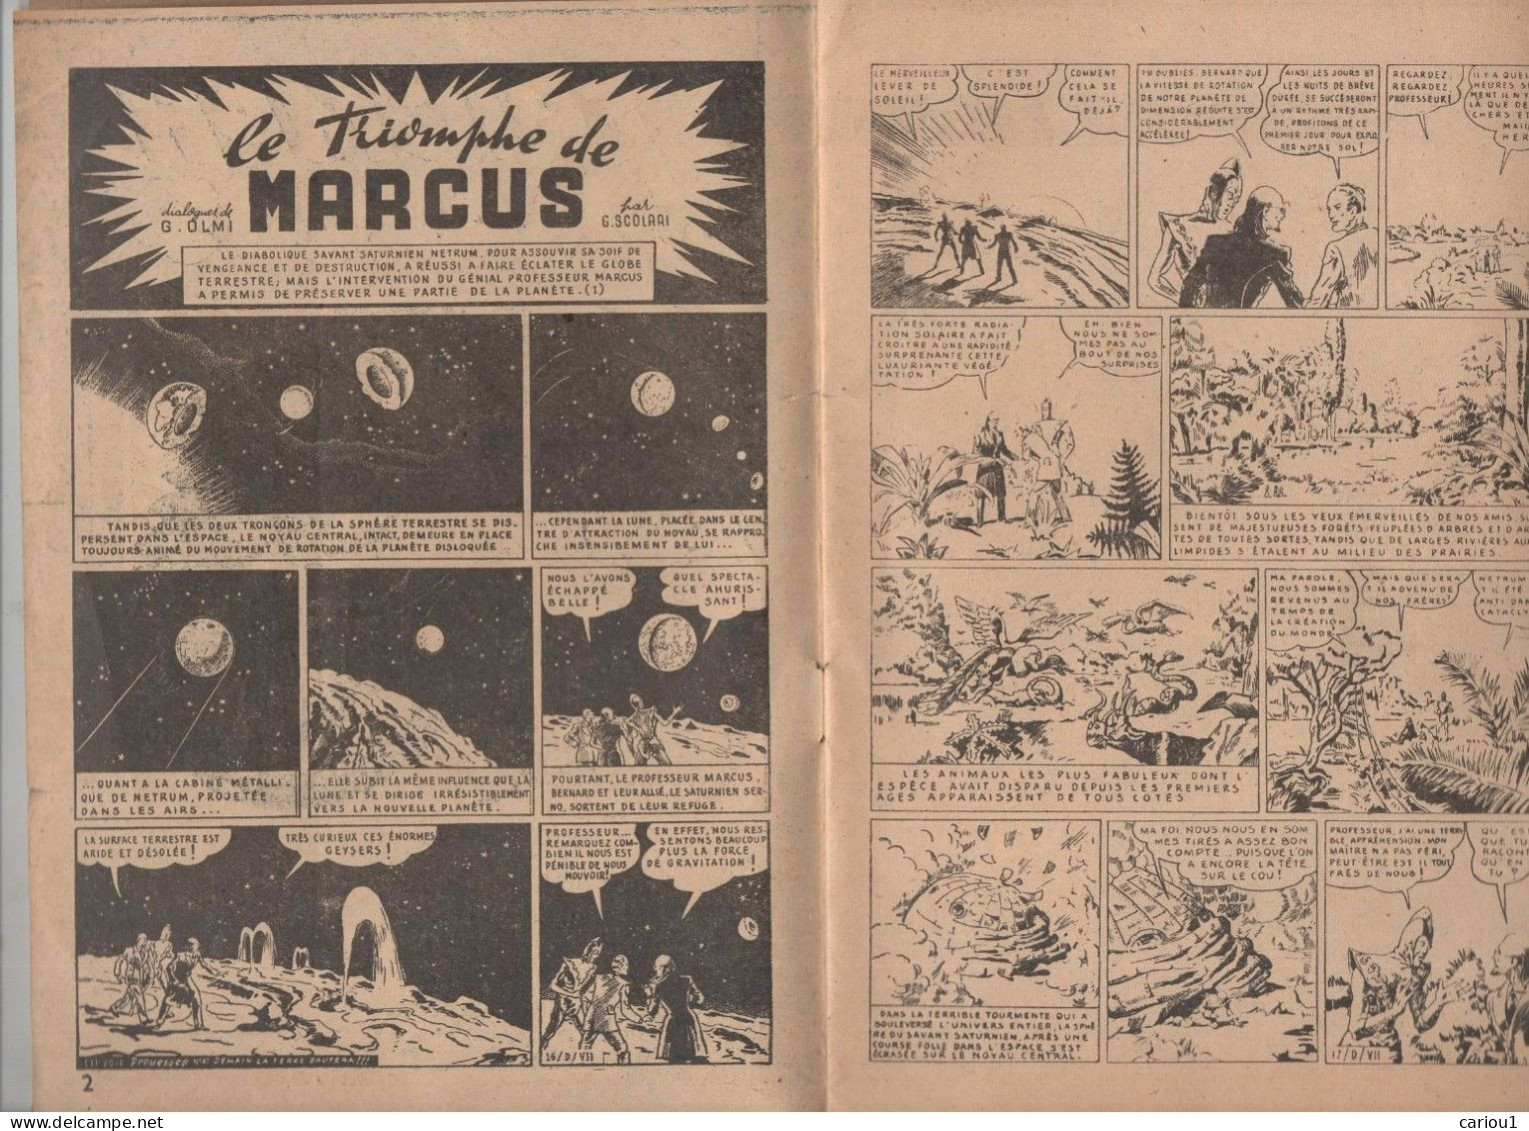 C1 SCOLARI Triomphe Marcus SELECTIONS PROUESSES # 2 1948 Saturne Contre Terre SF Port Inclus France - Original Edition - French